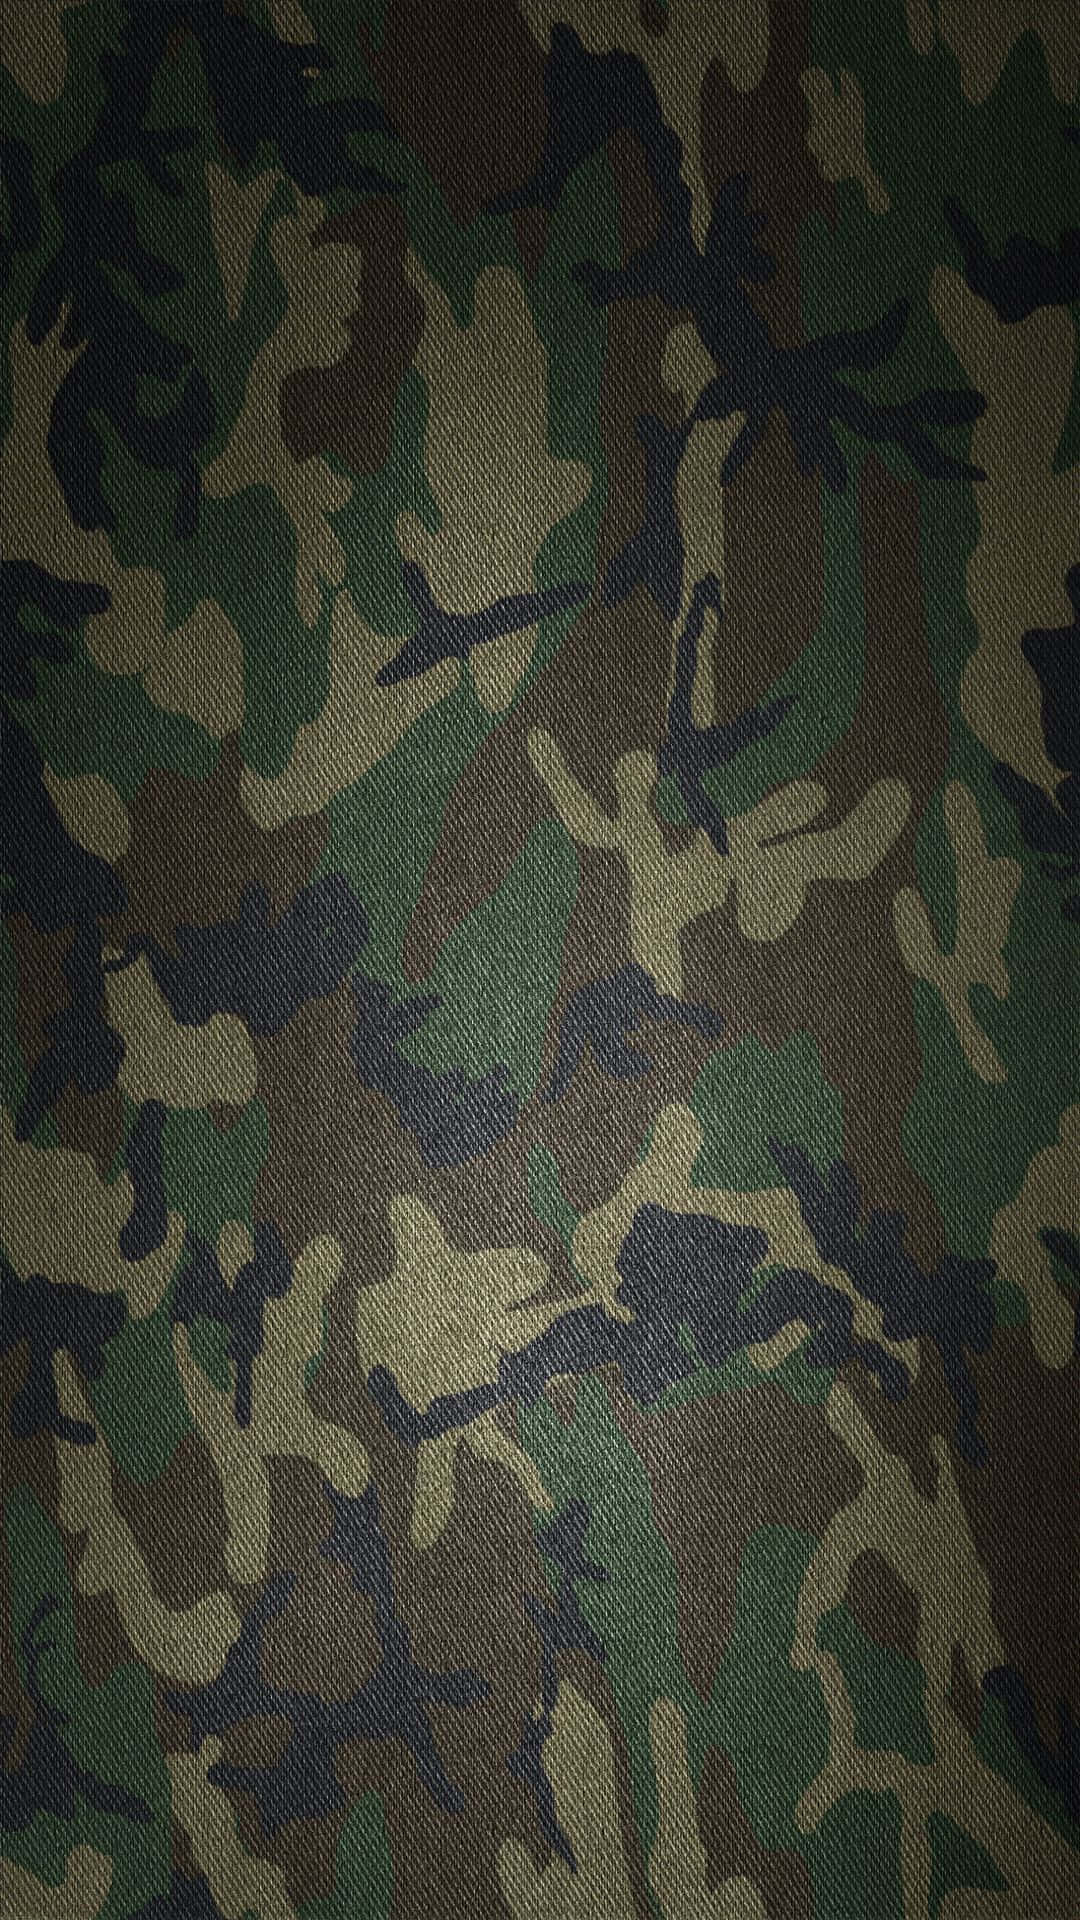 Camouflage Background 1080 X 1920 Background